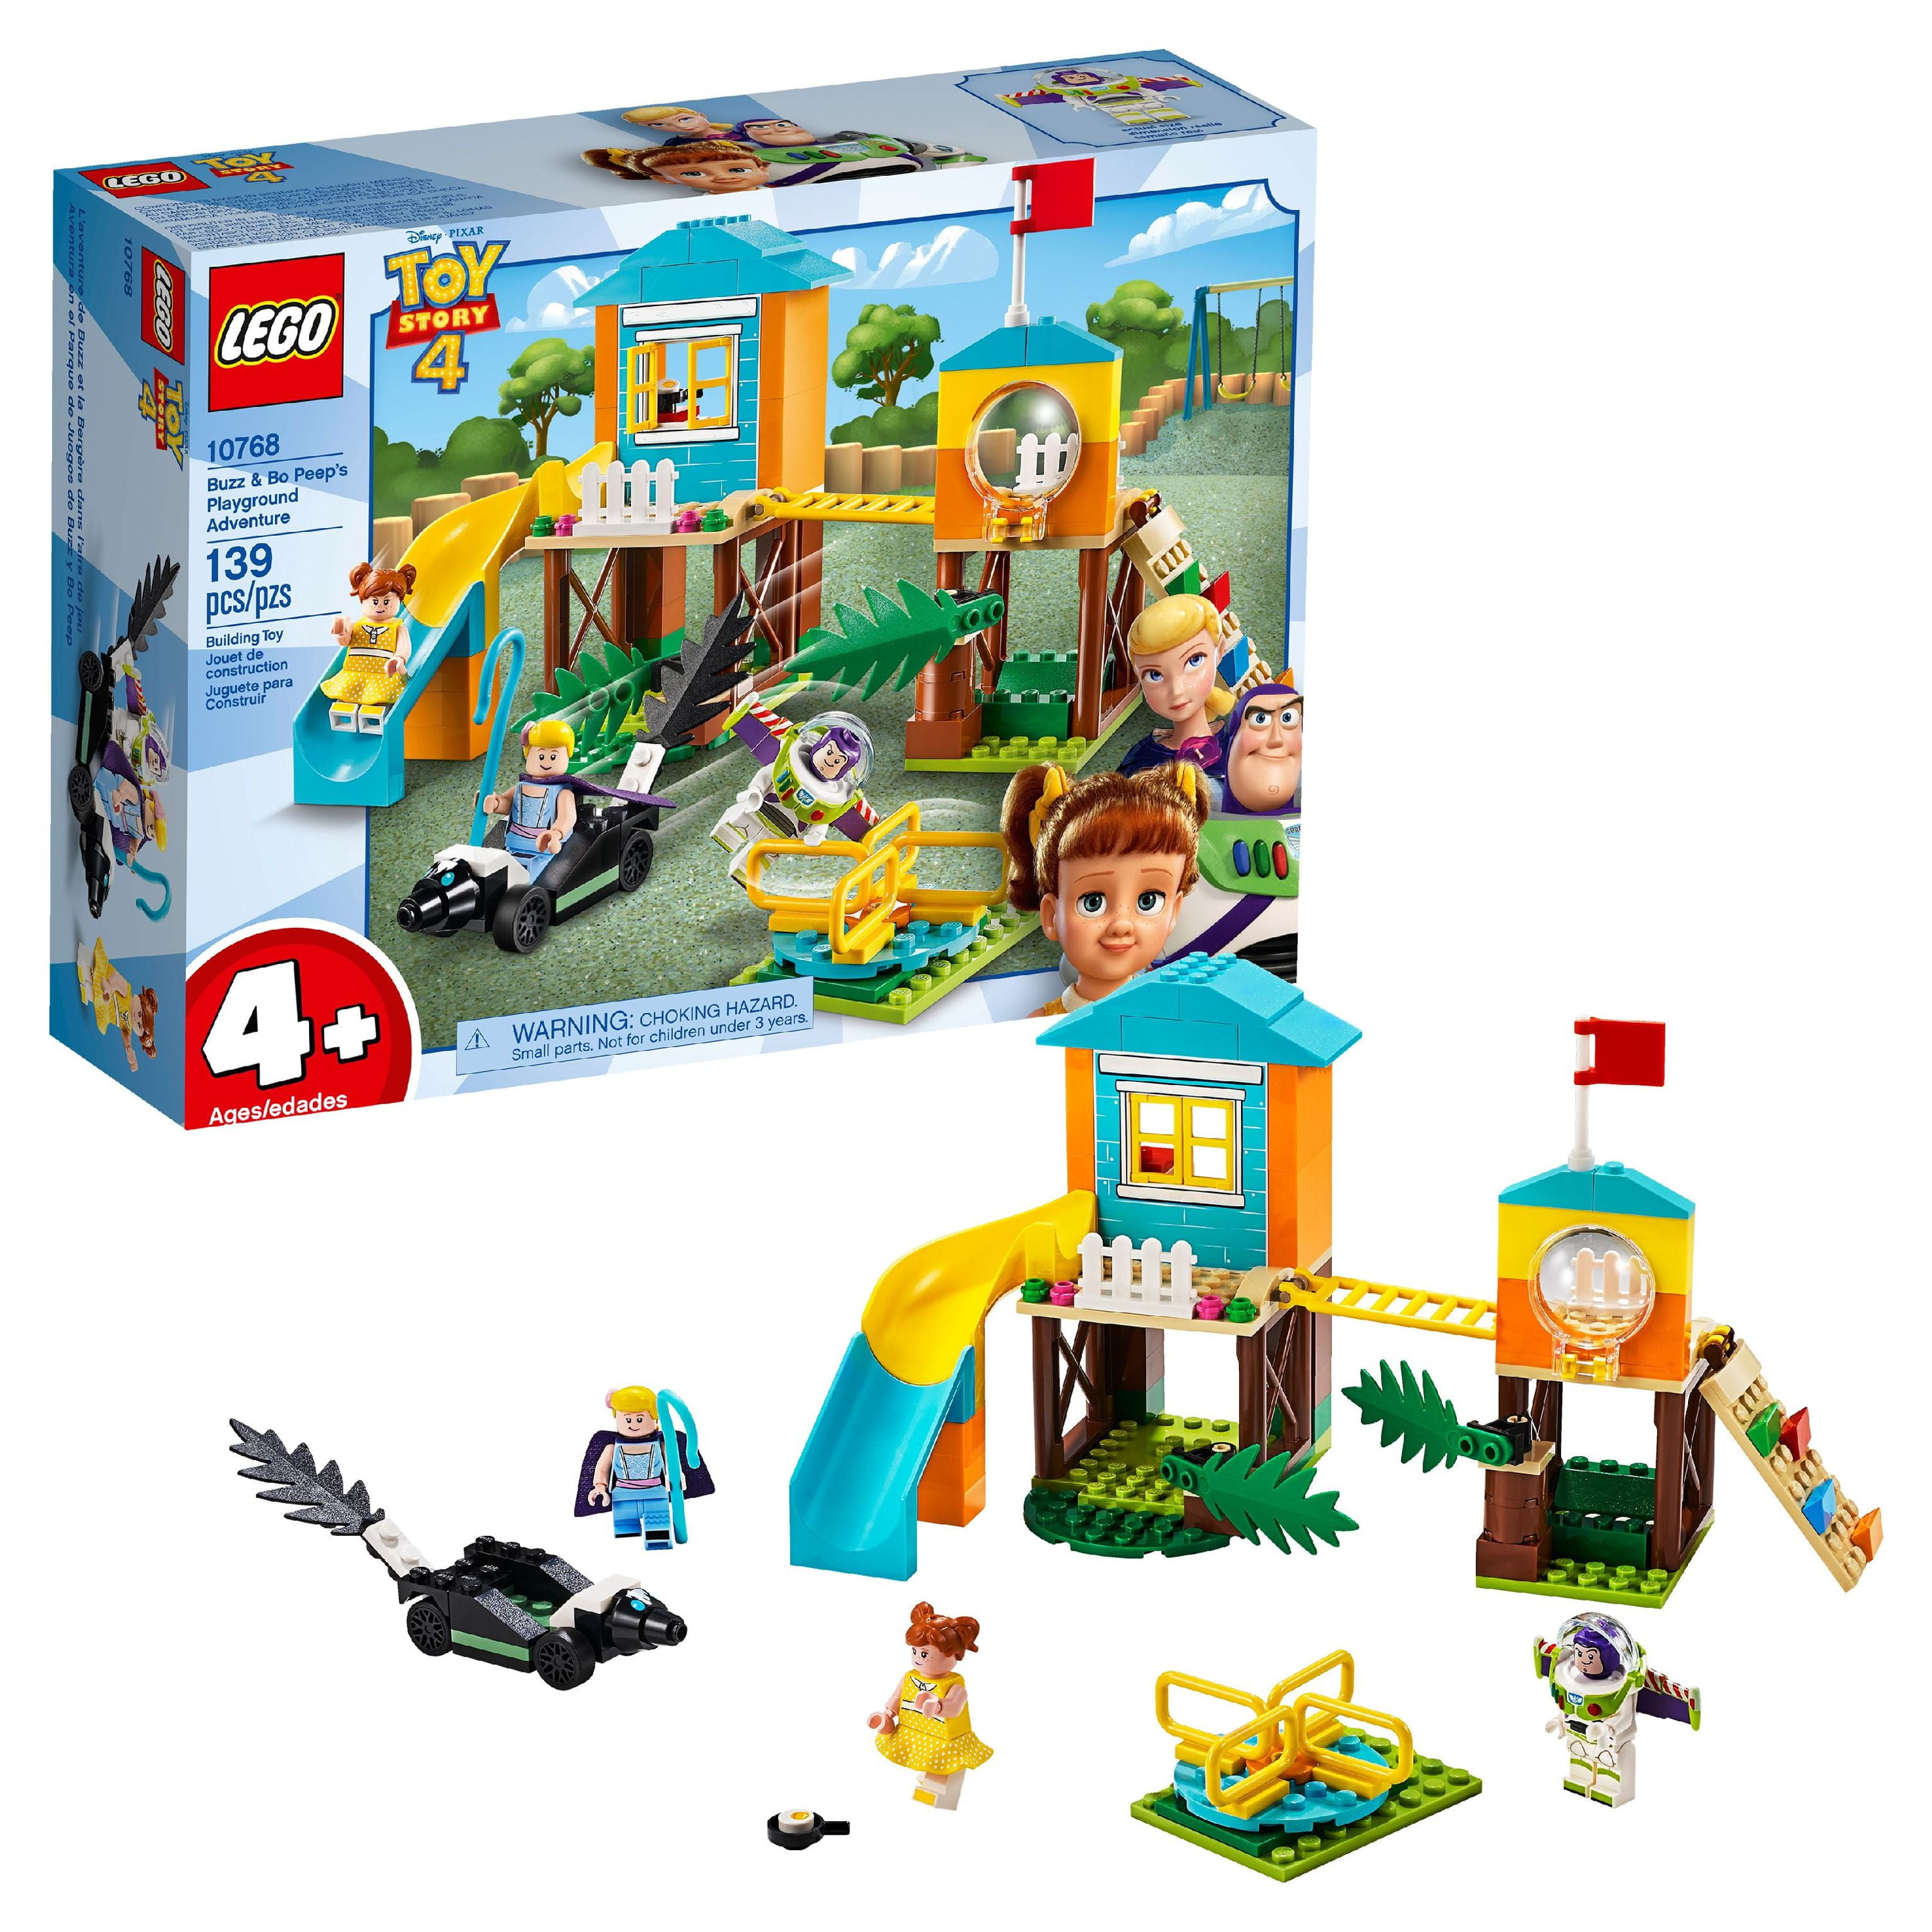 LEGO 4+ Toy Story 4 Buzz & Bo Peep's Playground Adventure Building